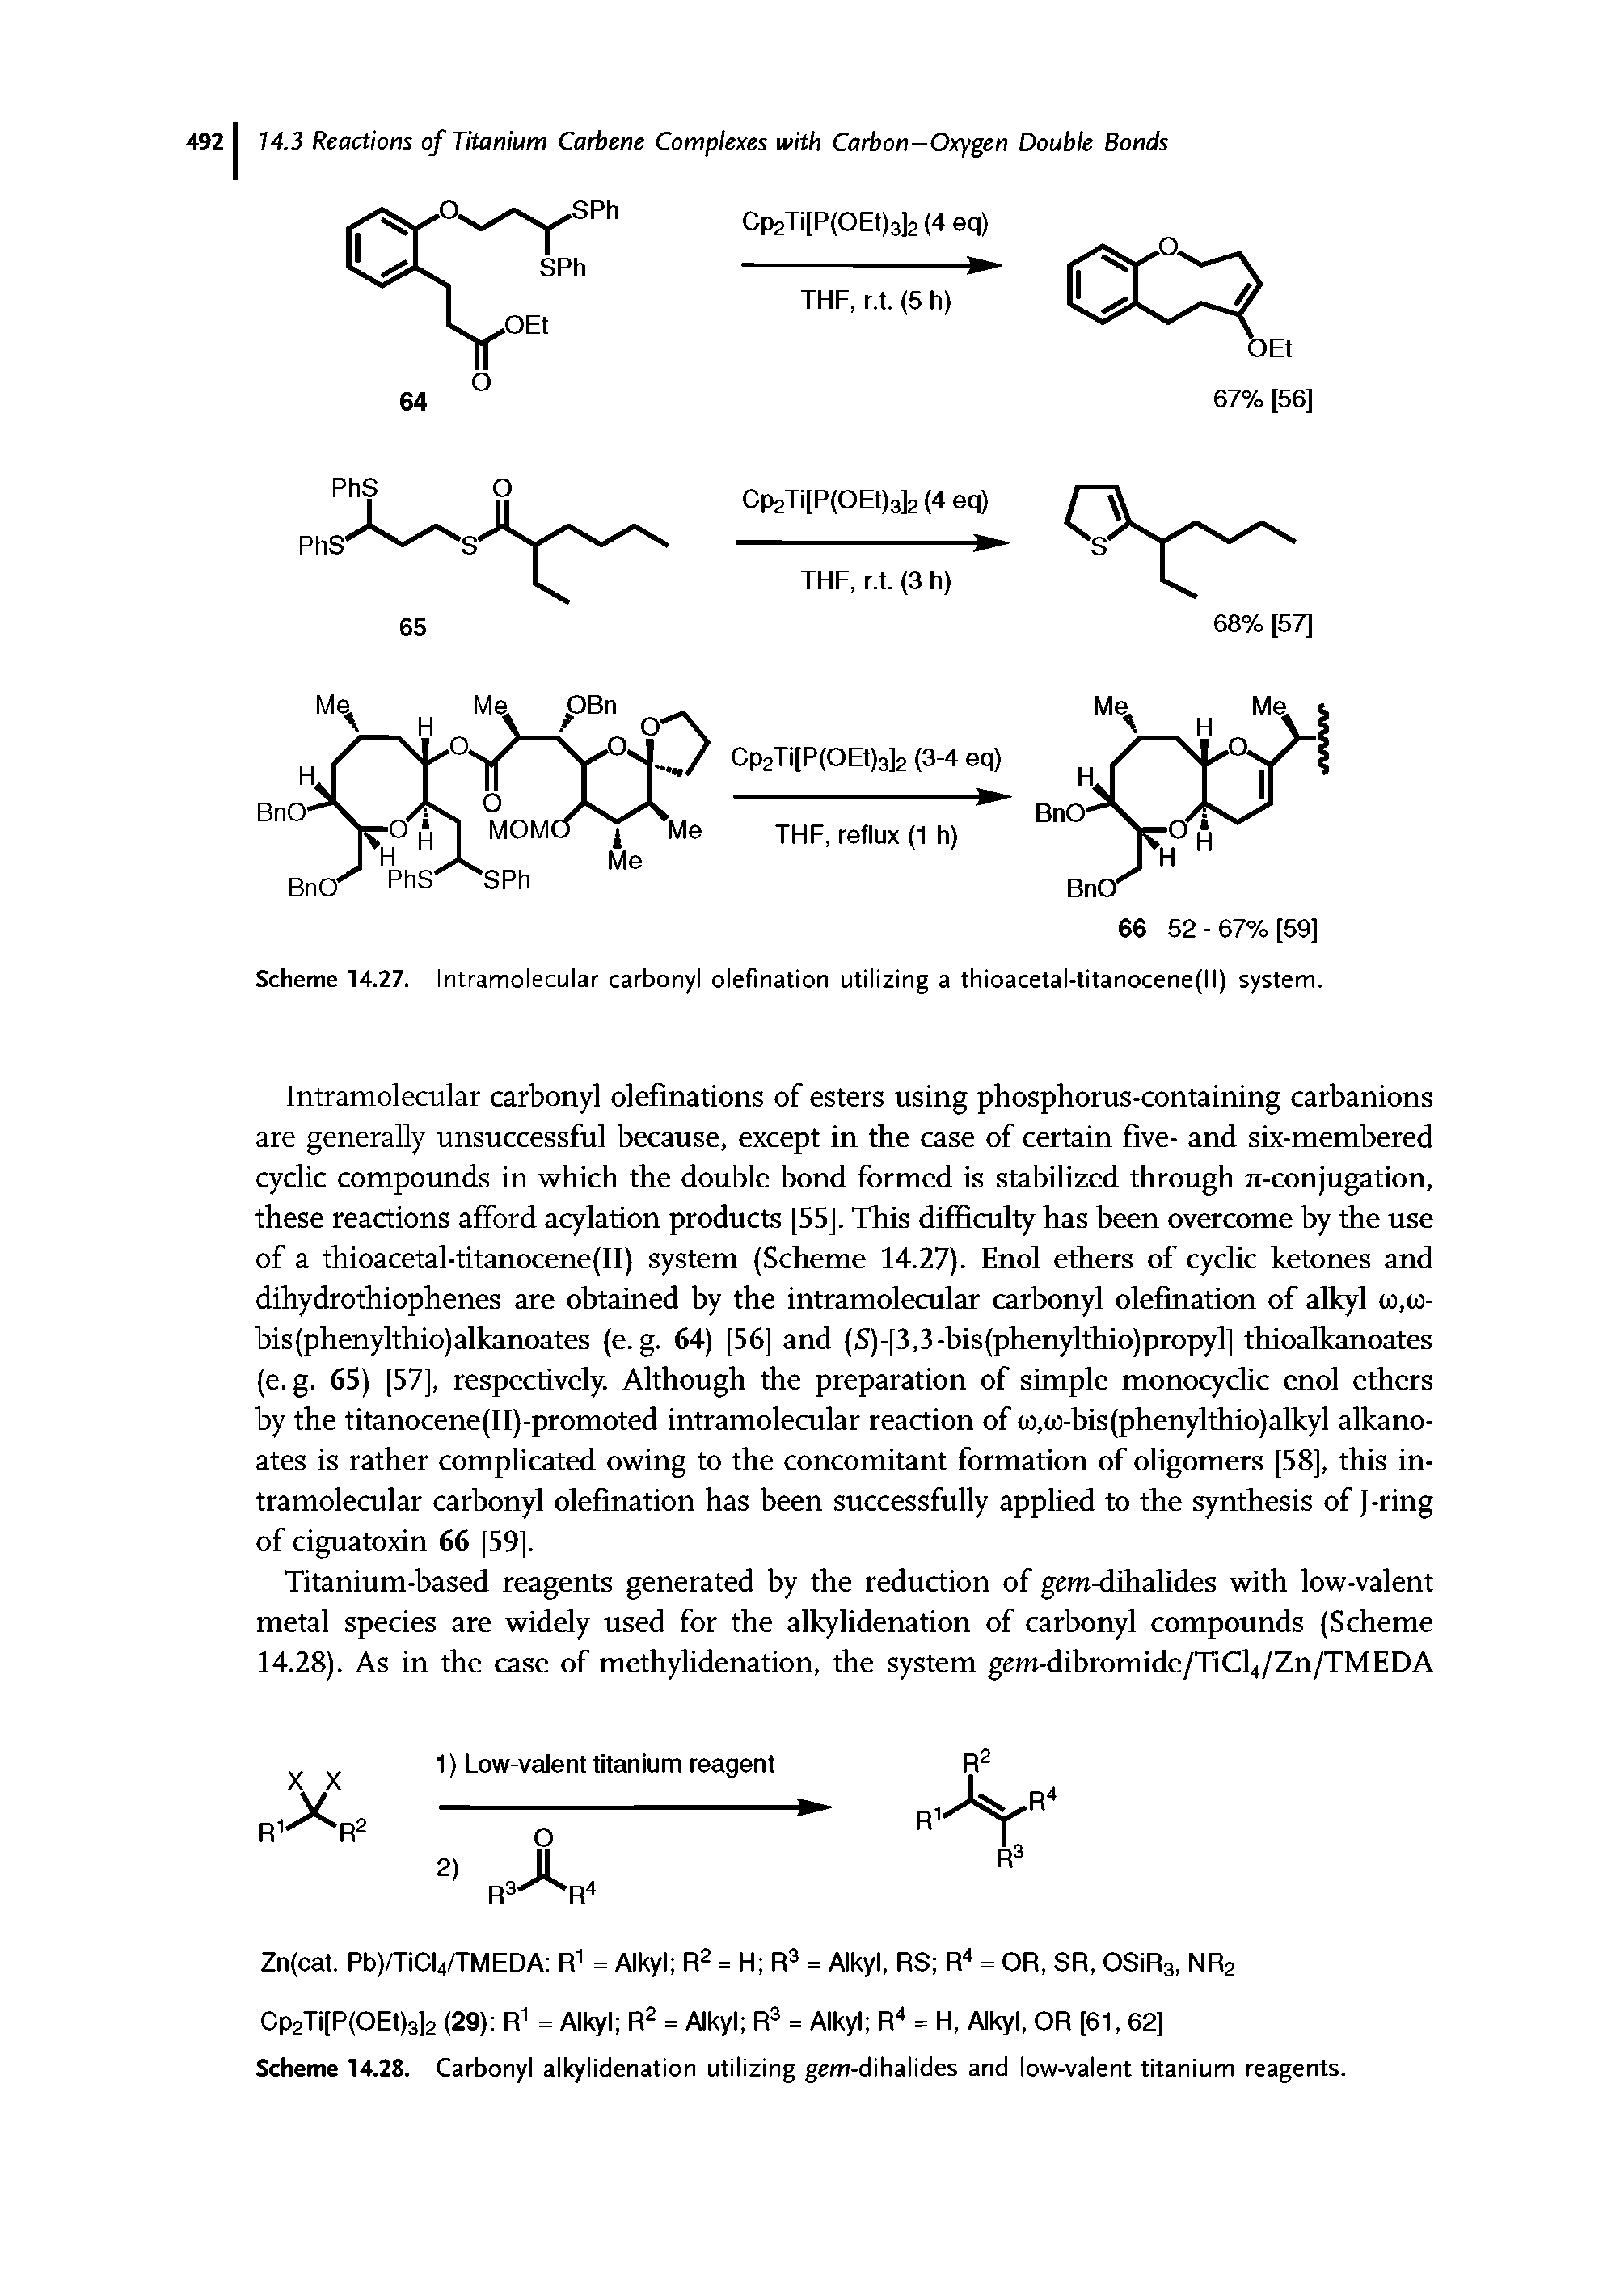 Scheme 14.28. Carbonyl alkylidenation utilizing gem-dihalides and low-valent titanium reagents.